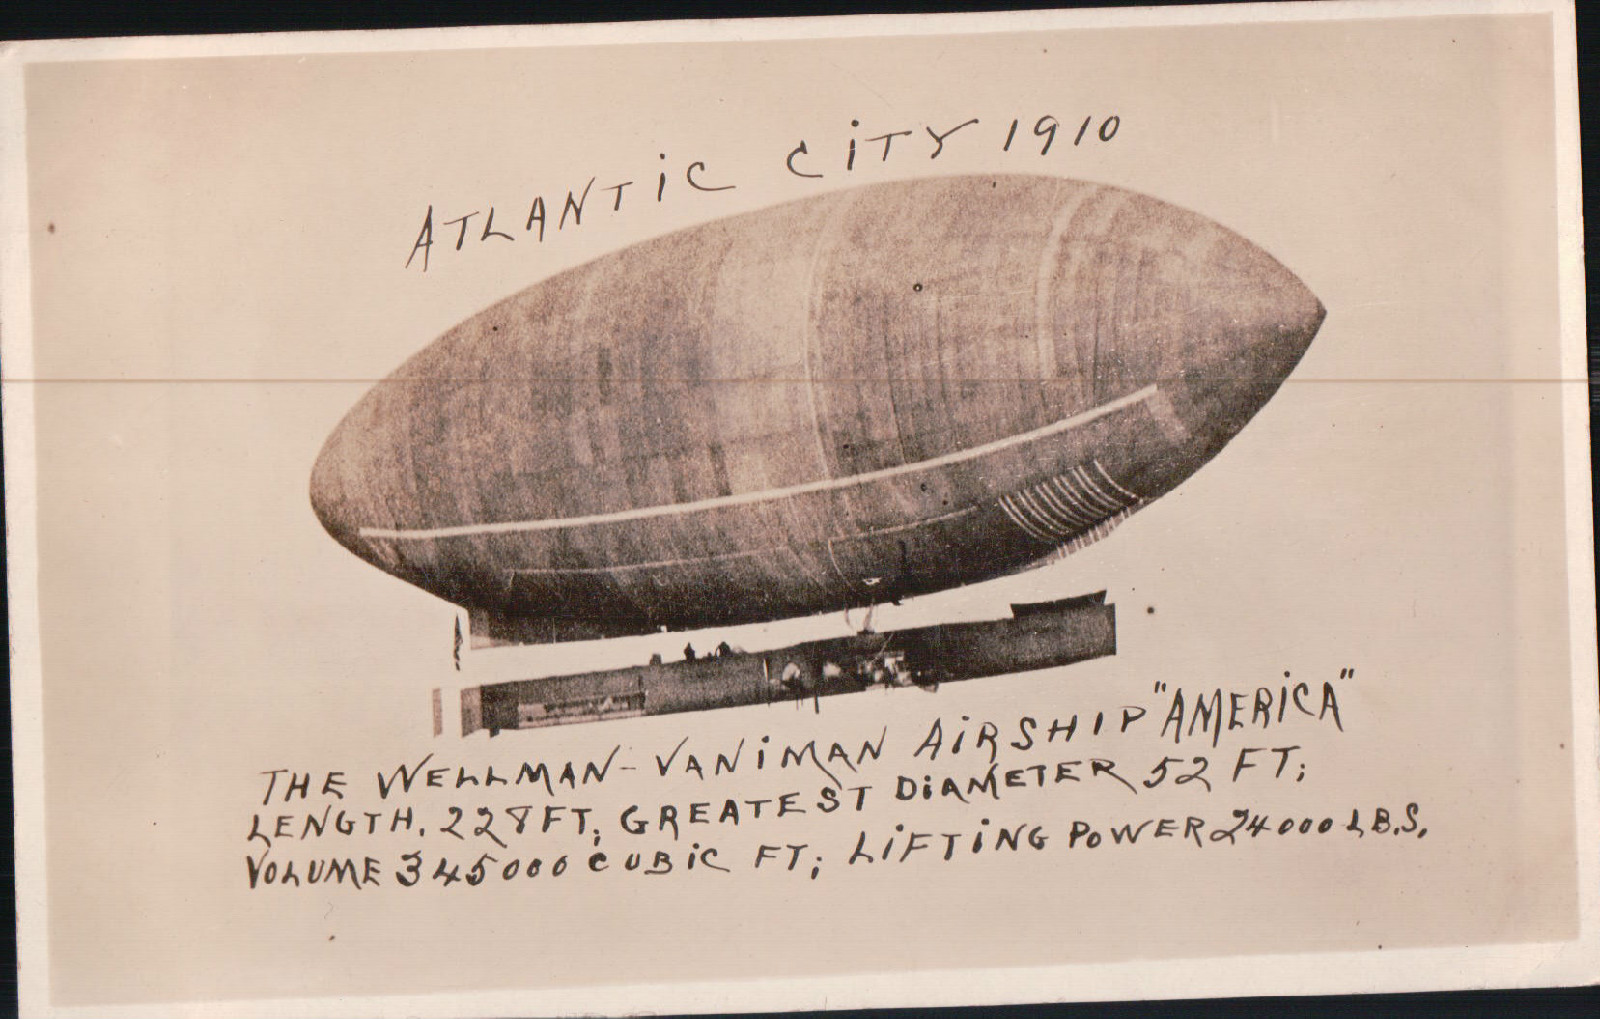 Atlantic City - The Wellman-Vaniman Airship America - 1910